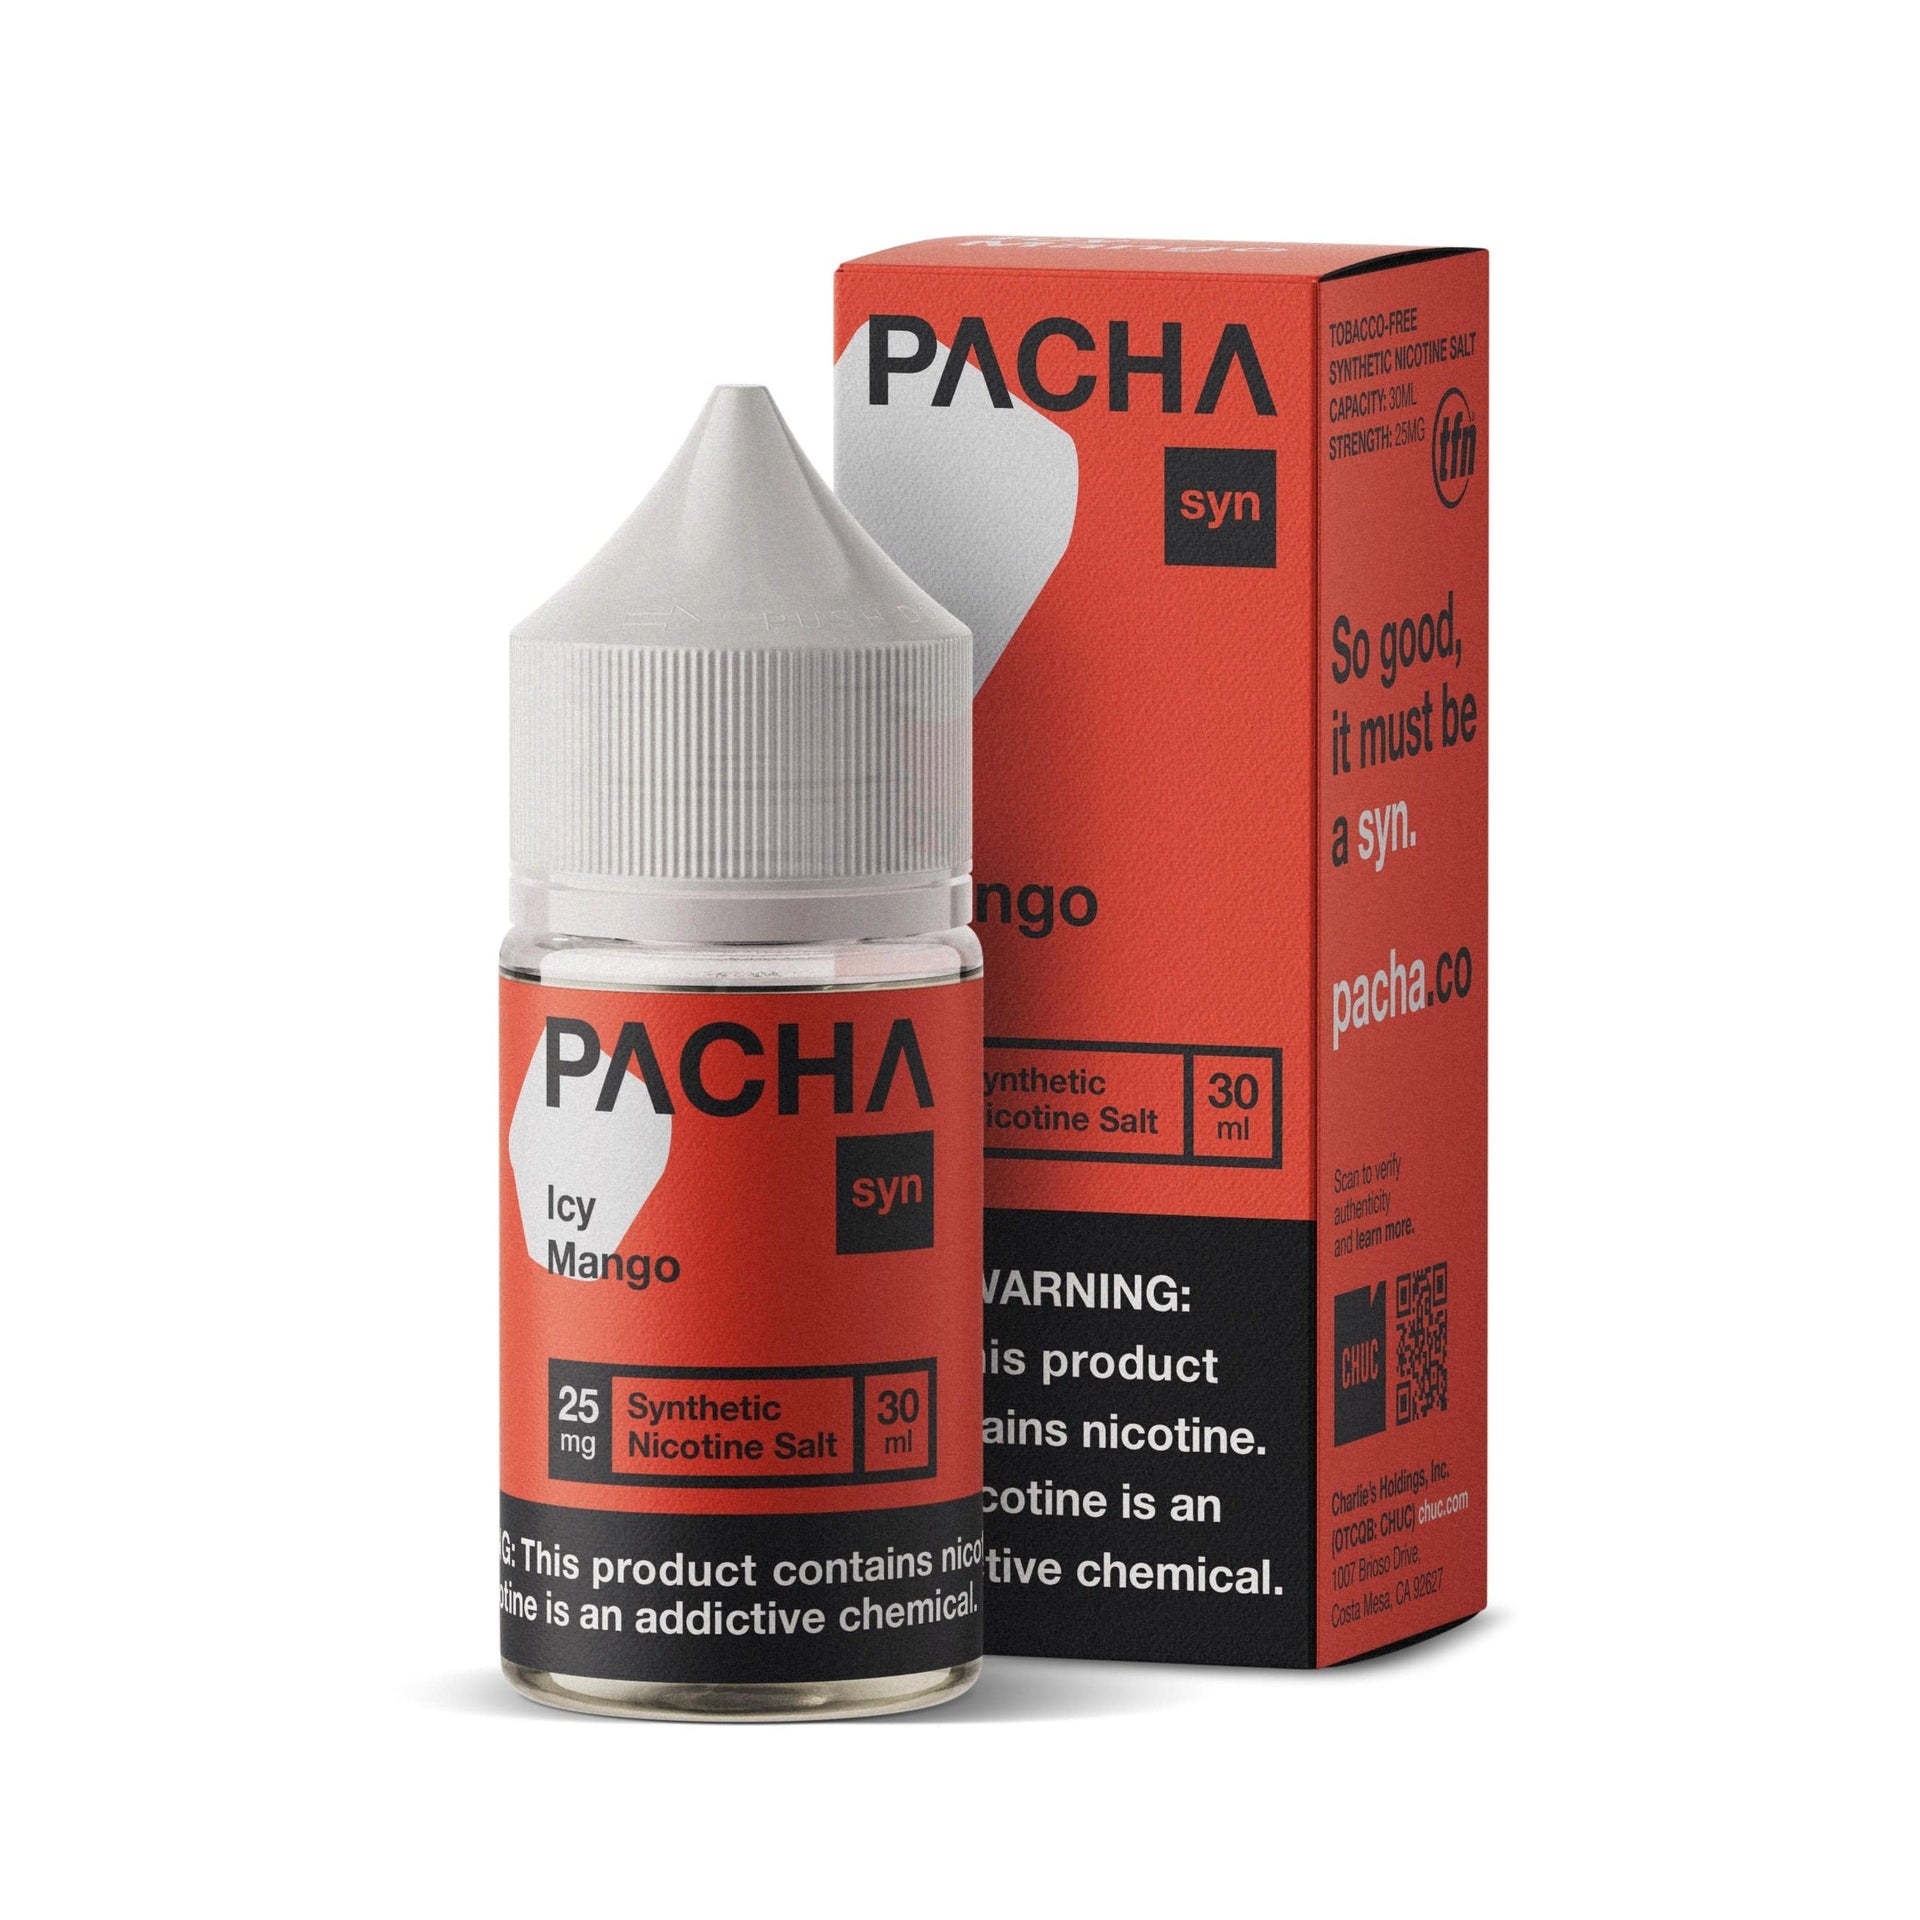 Pacha Syn Icy Mango 30ml Nic Salt Vape Juice - Pachamama